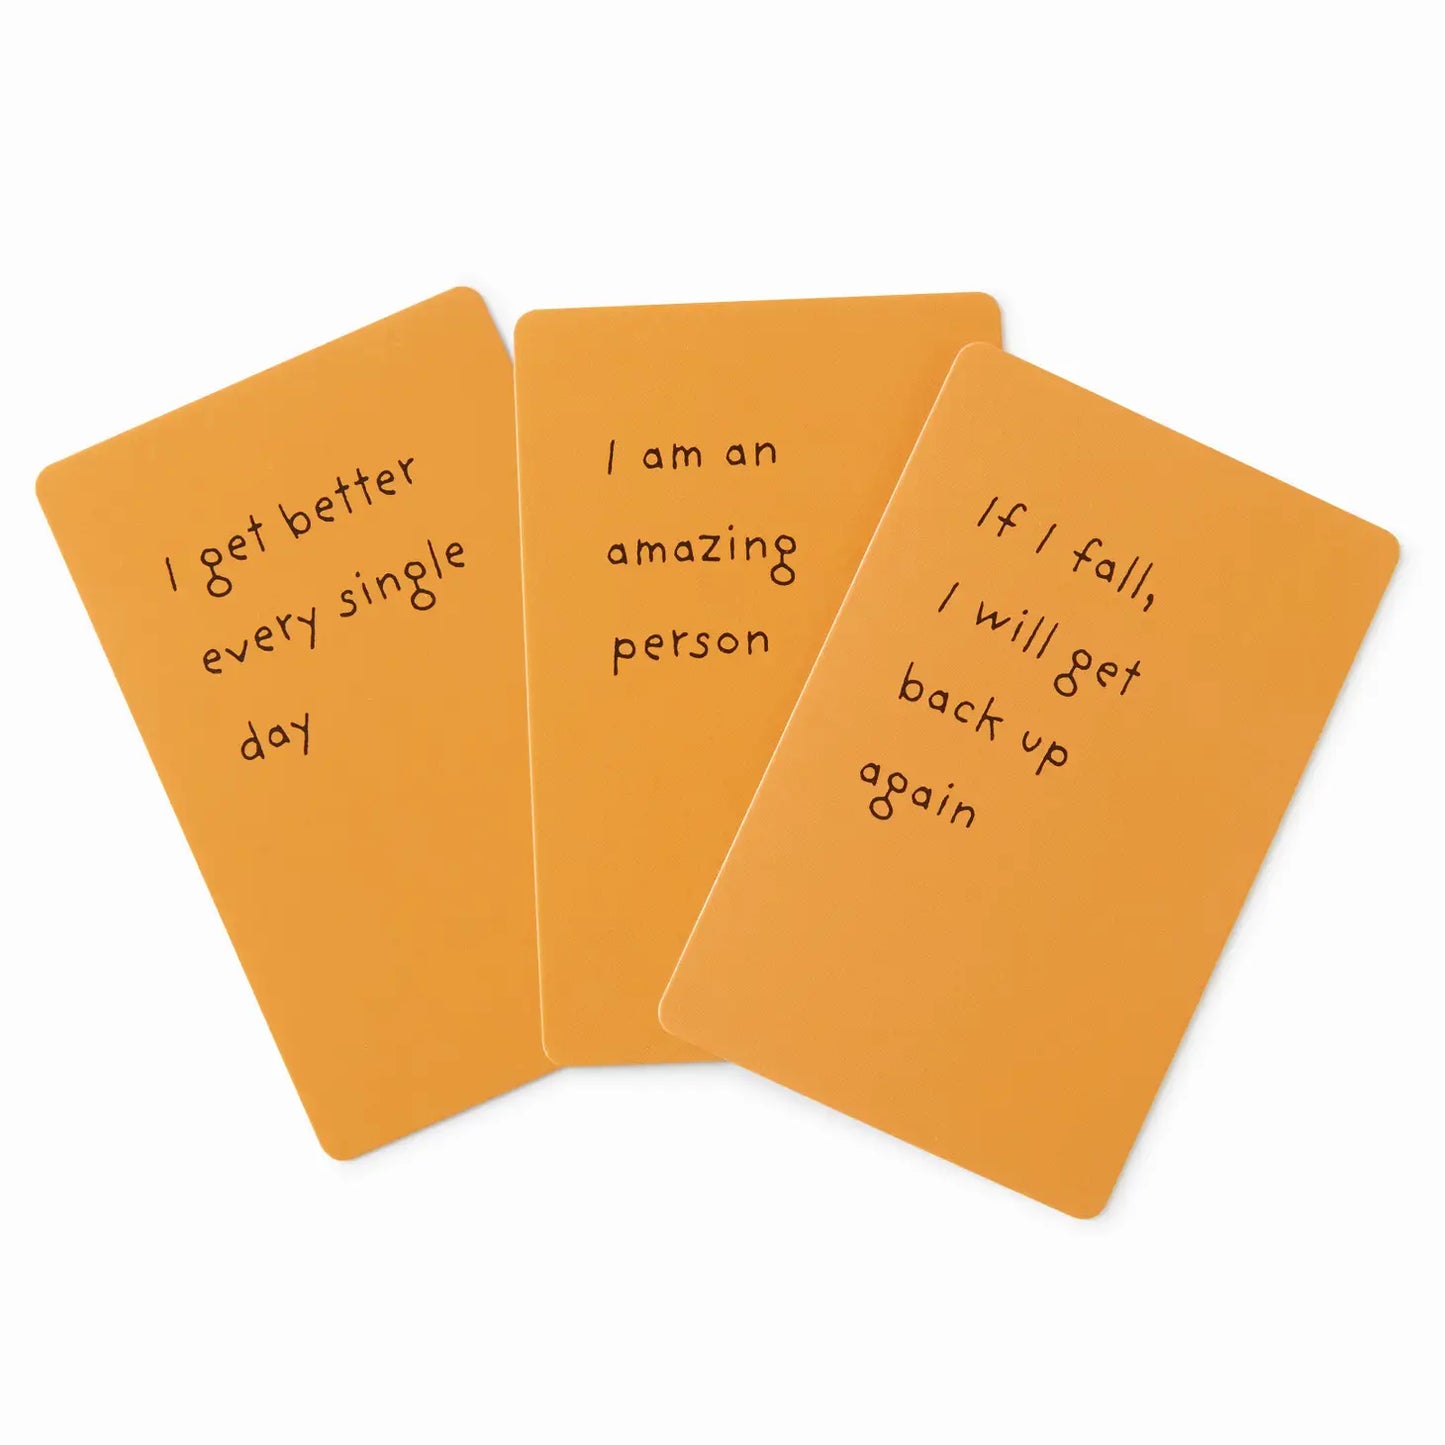 Affirmations Cards for Kids